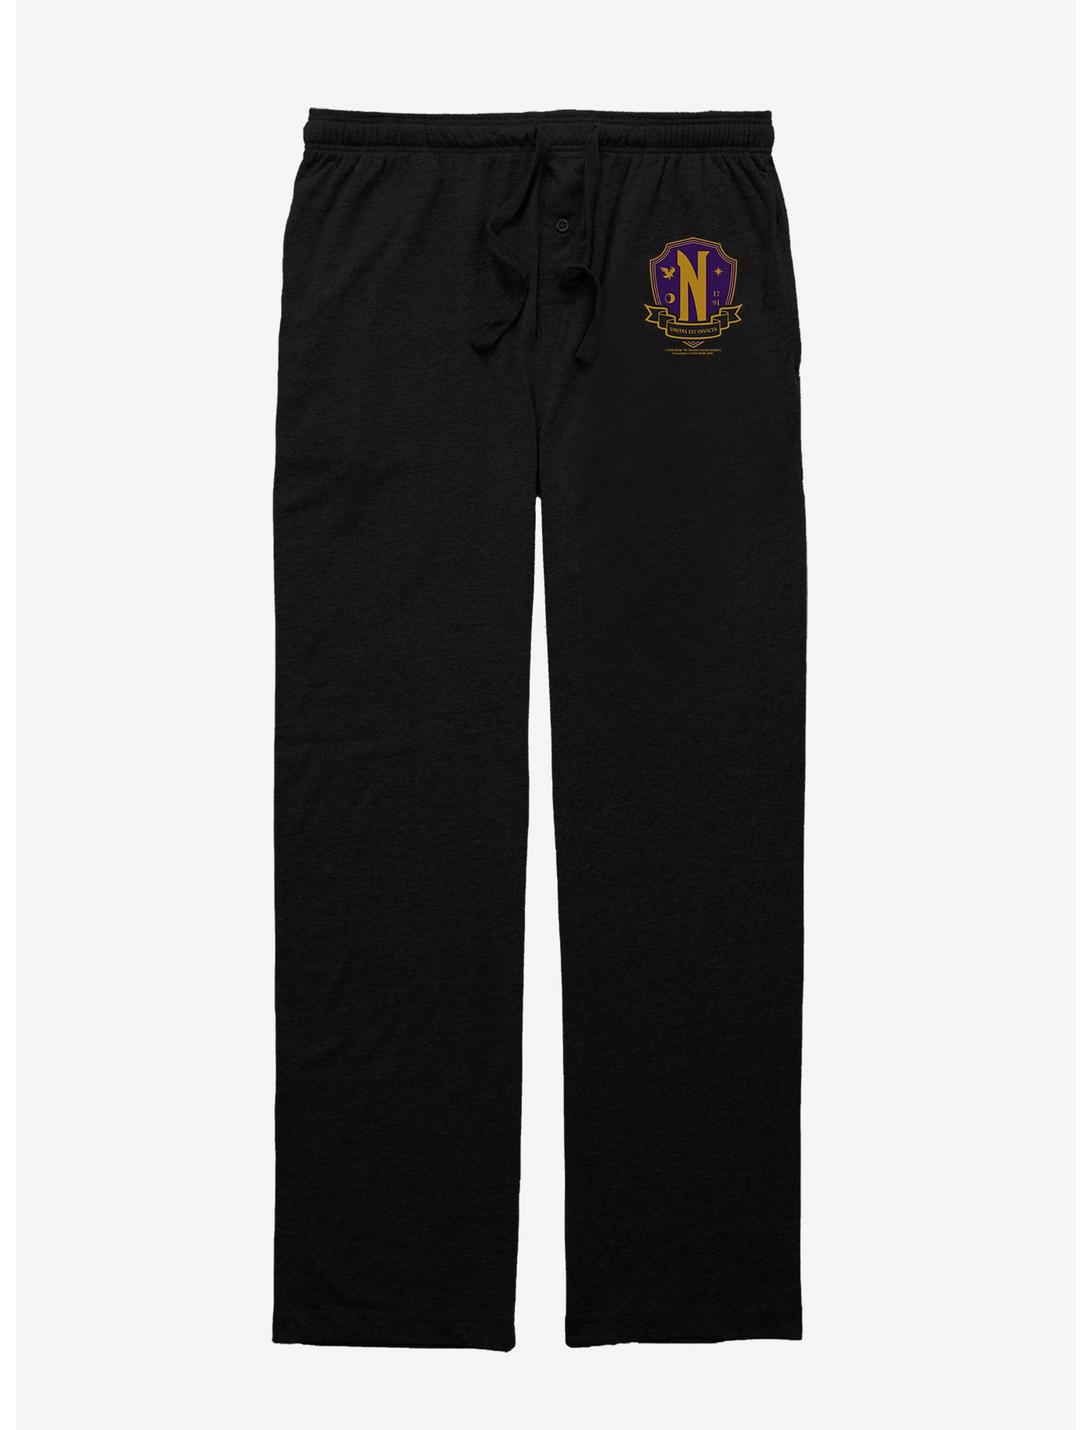 Wednesday Nevermore Academy Crest Pajama Pants, BLACK, hi-res